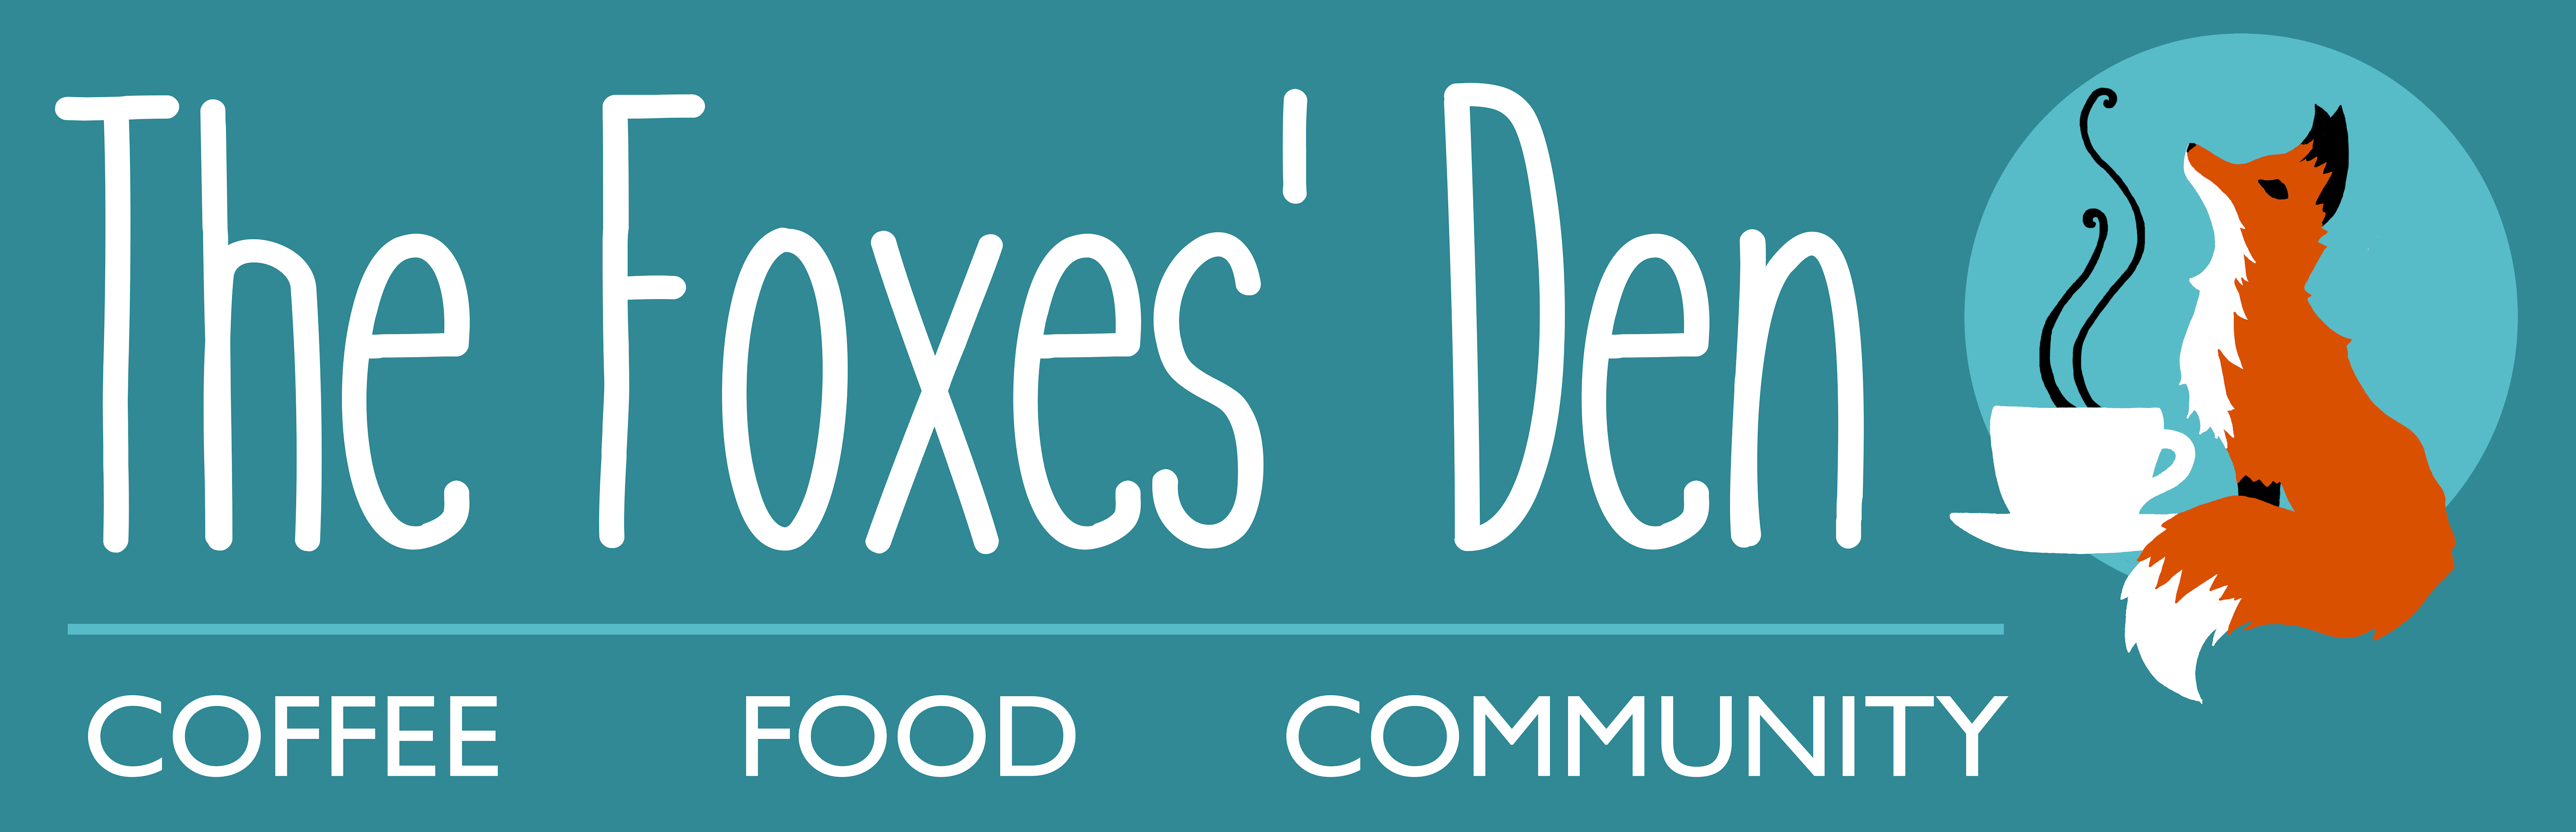 The Foxes' Den Community Hub